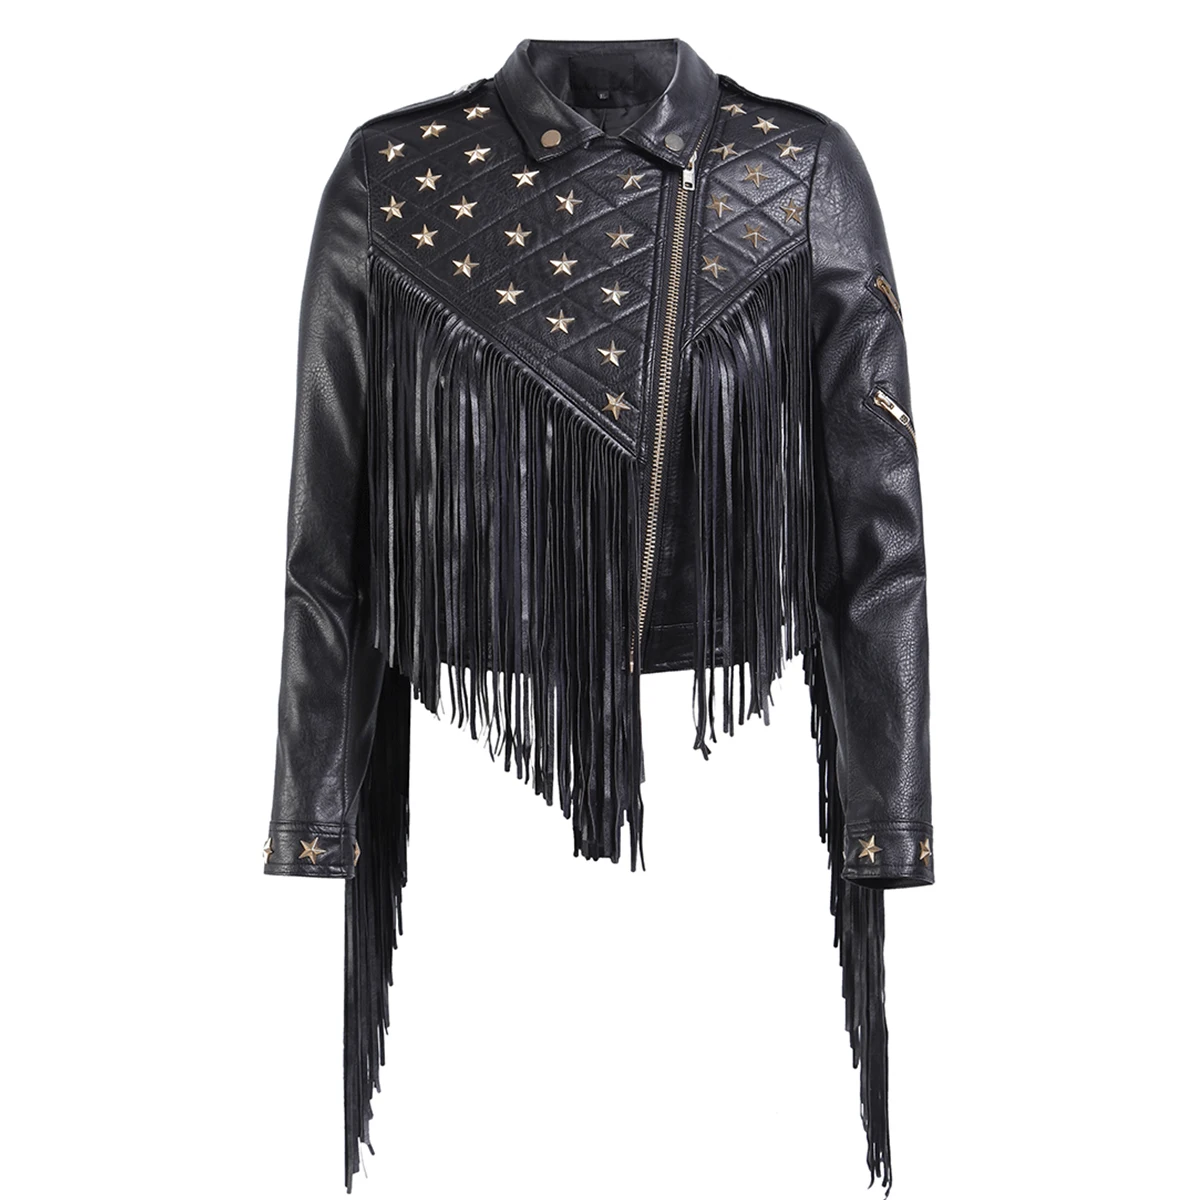 Enlarge NEW Autumn Winter Streetwear Zipper Jacket Women Hand-studded Star Rivet Tassel Chain Short Tops Slim Fit Black Casual Coats